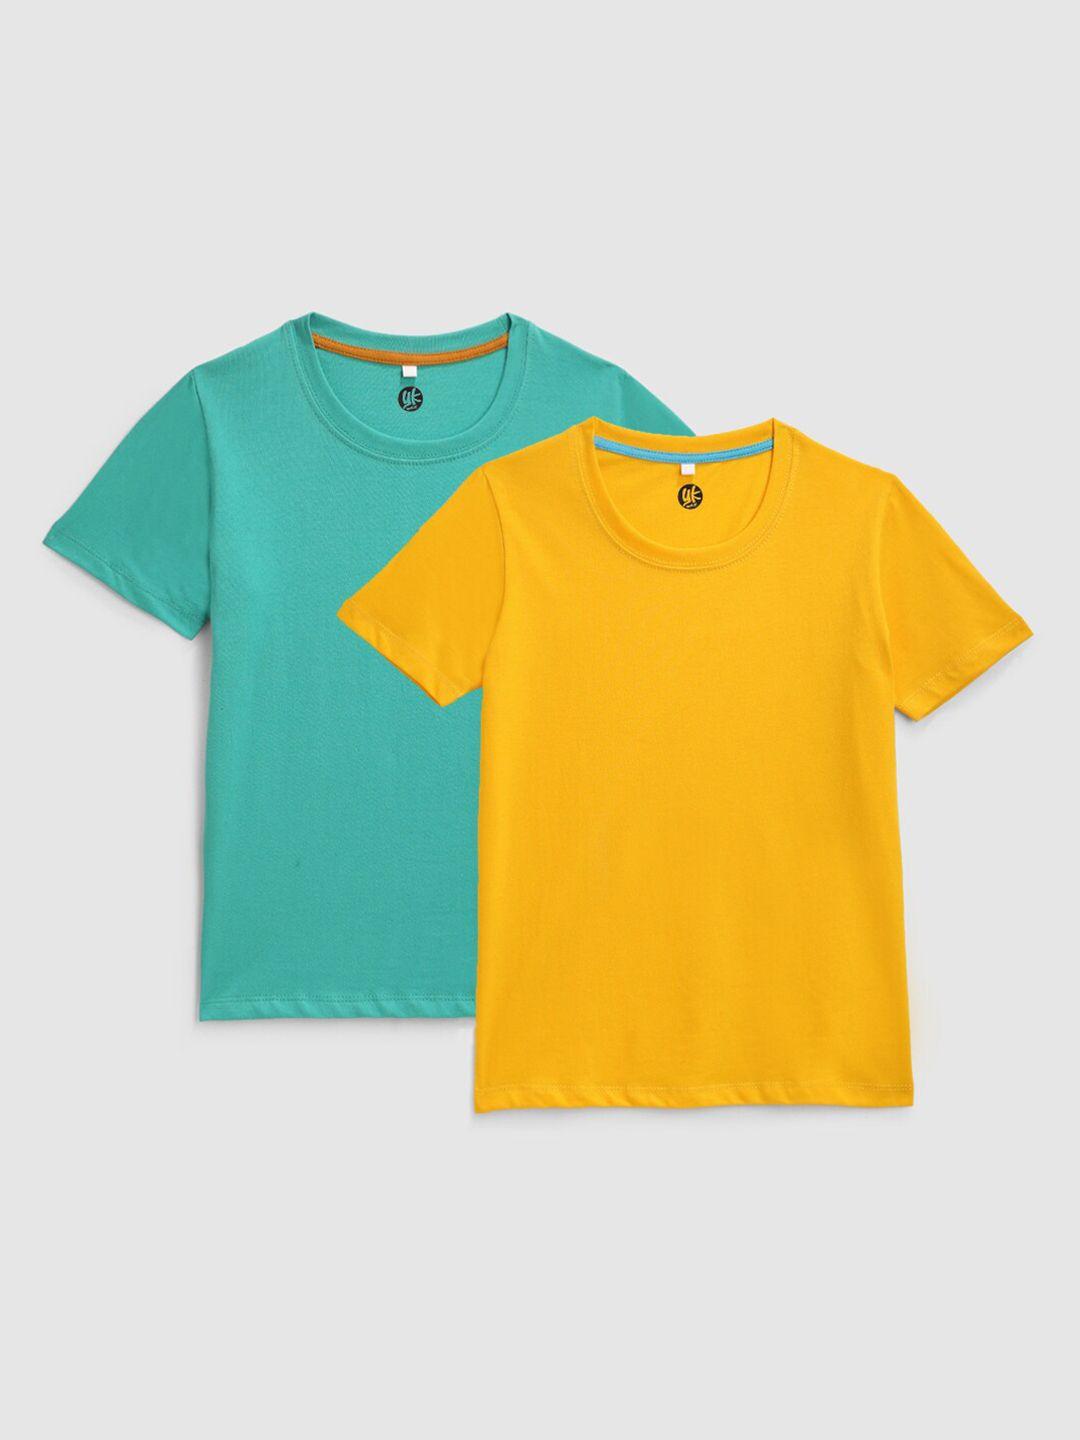 yk boys yellow & green cotton running t-shirt set of 2